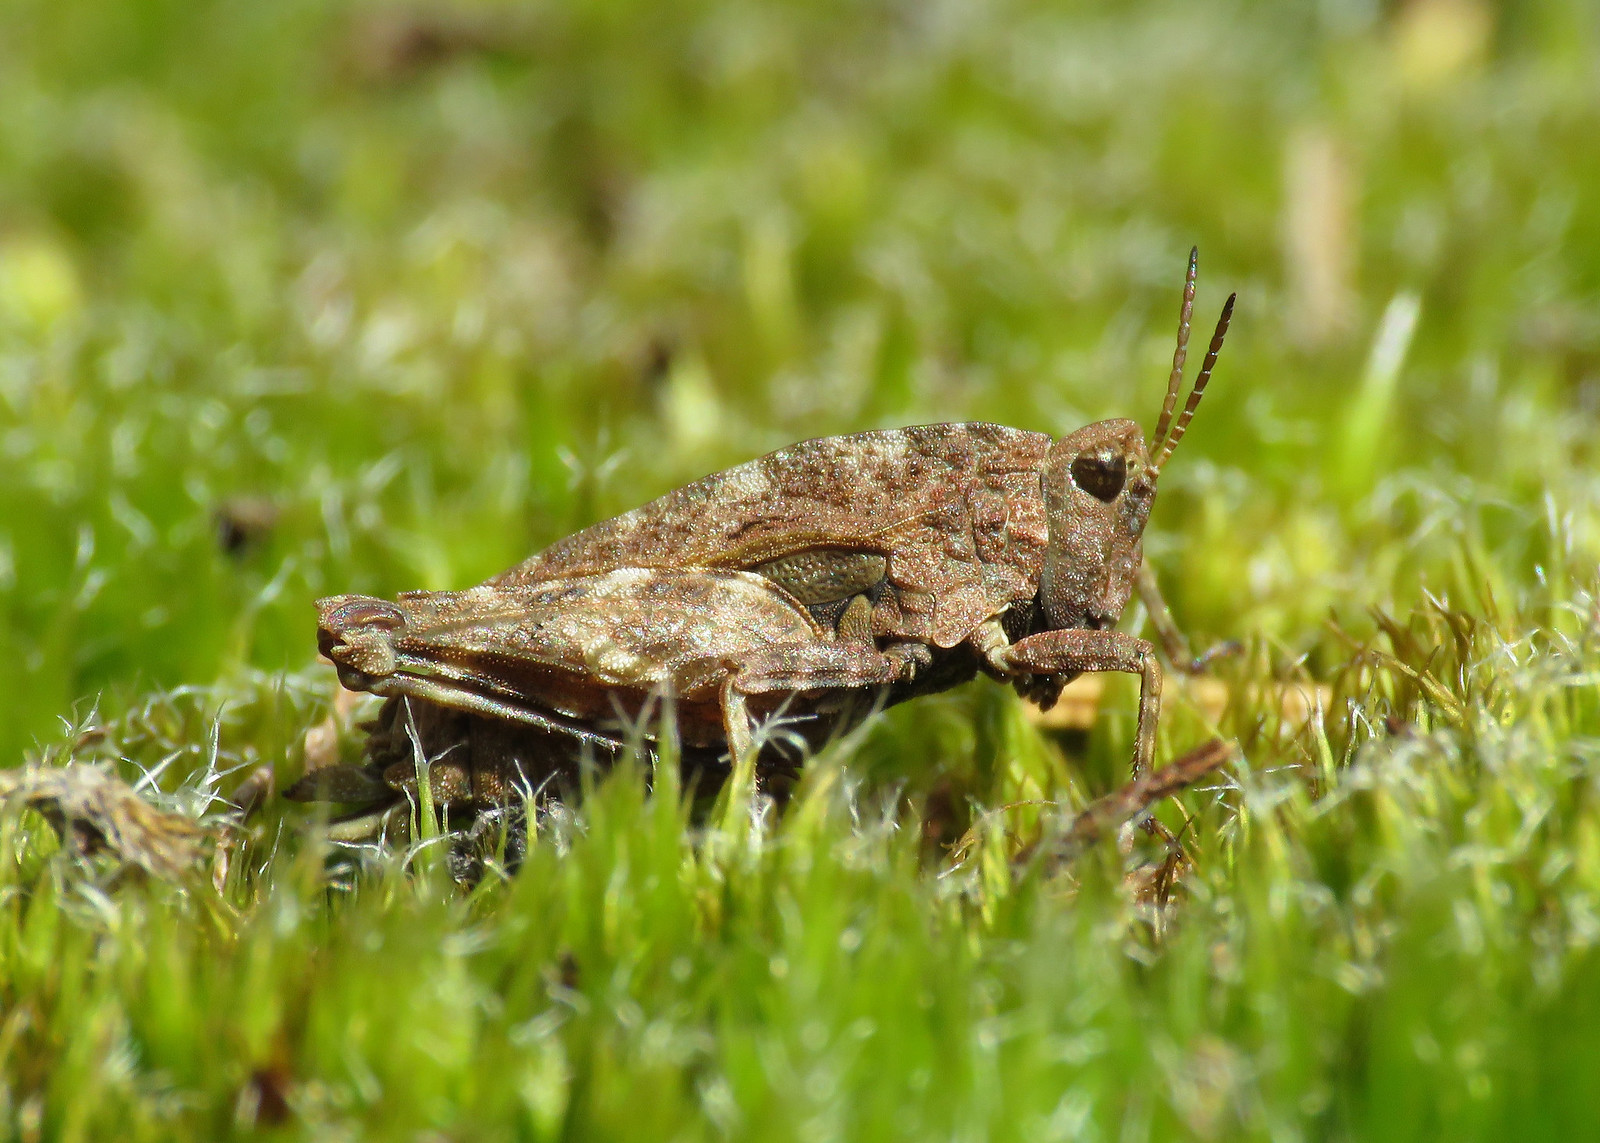 Common Groundhopper - Tetrix undulata